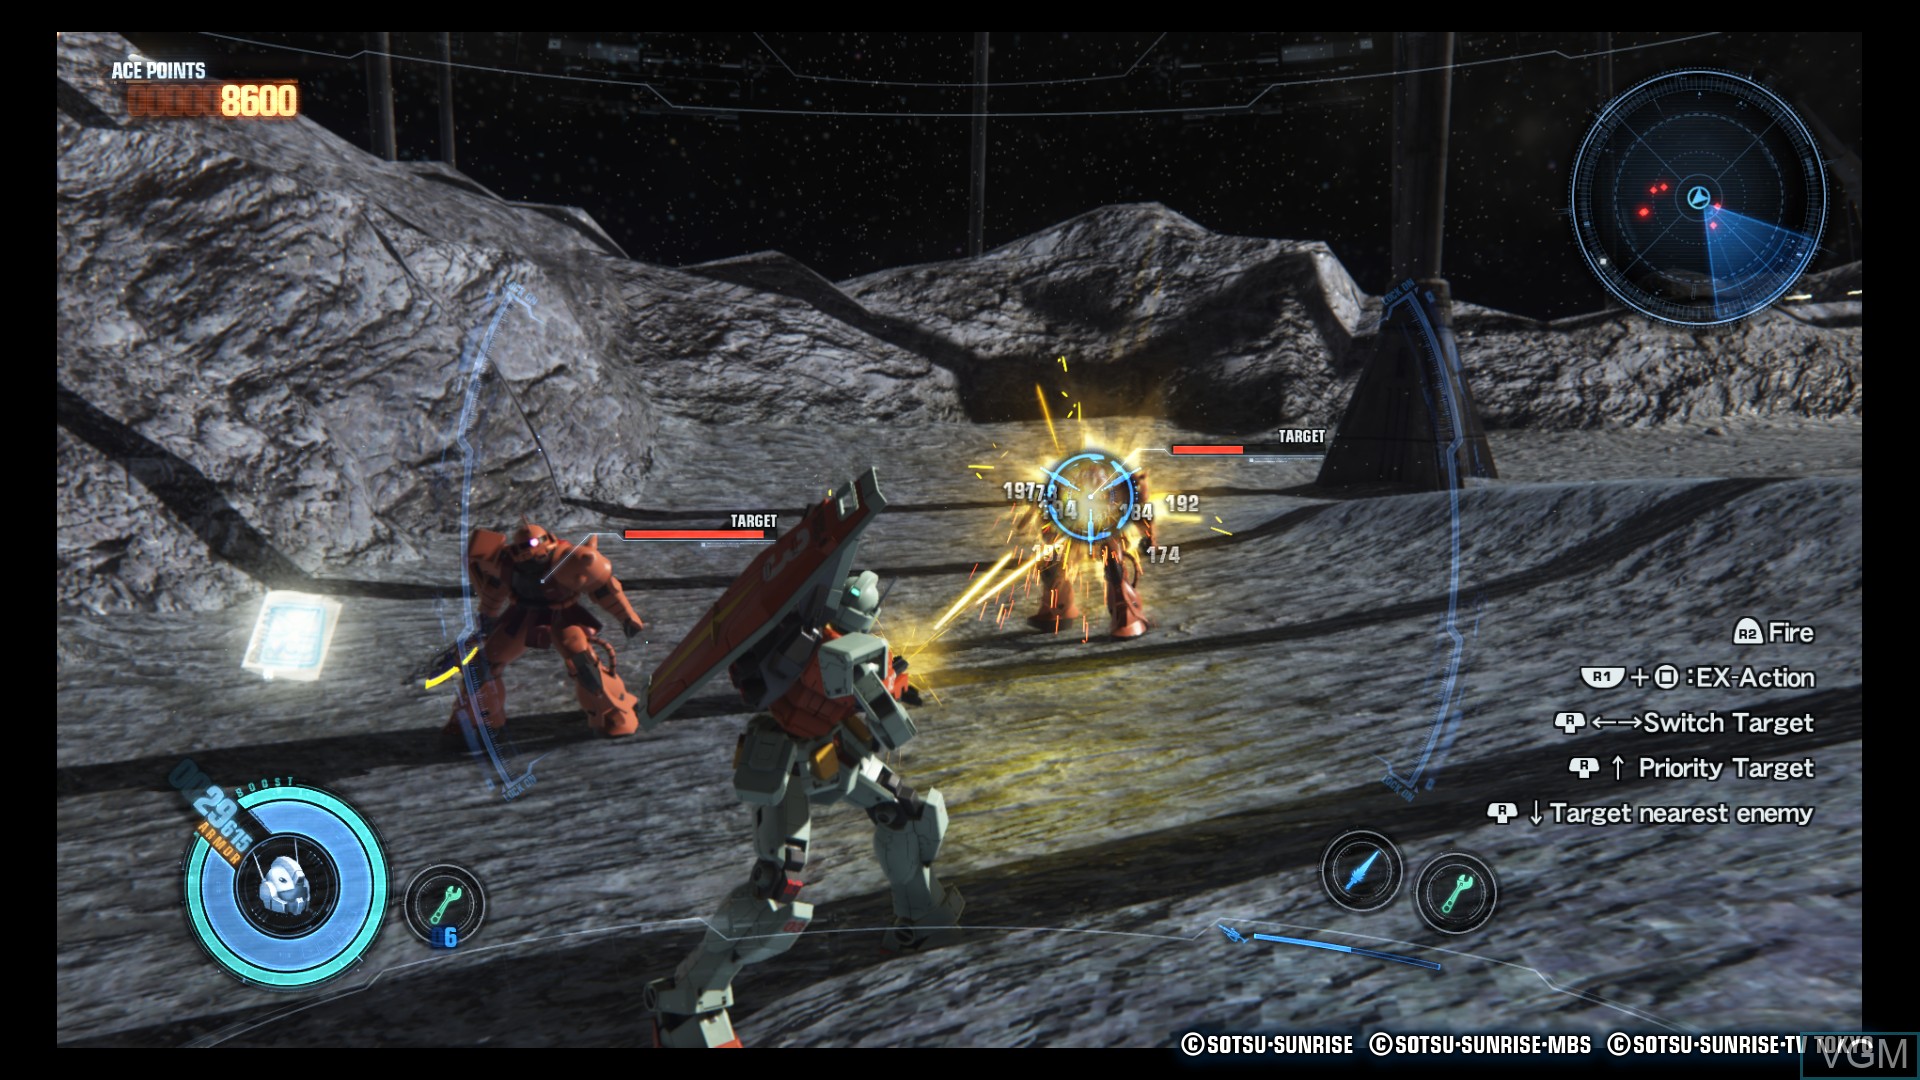 Gundam Breaker 3